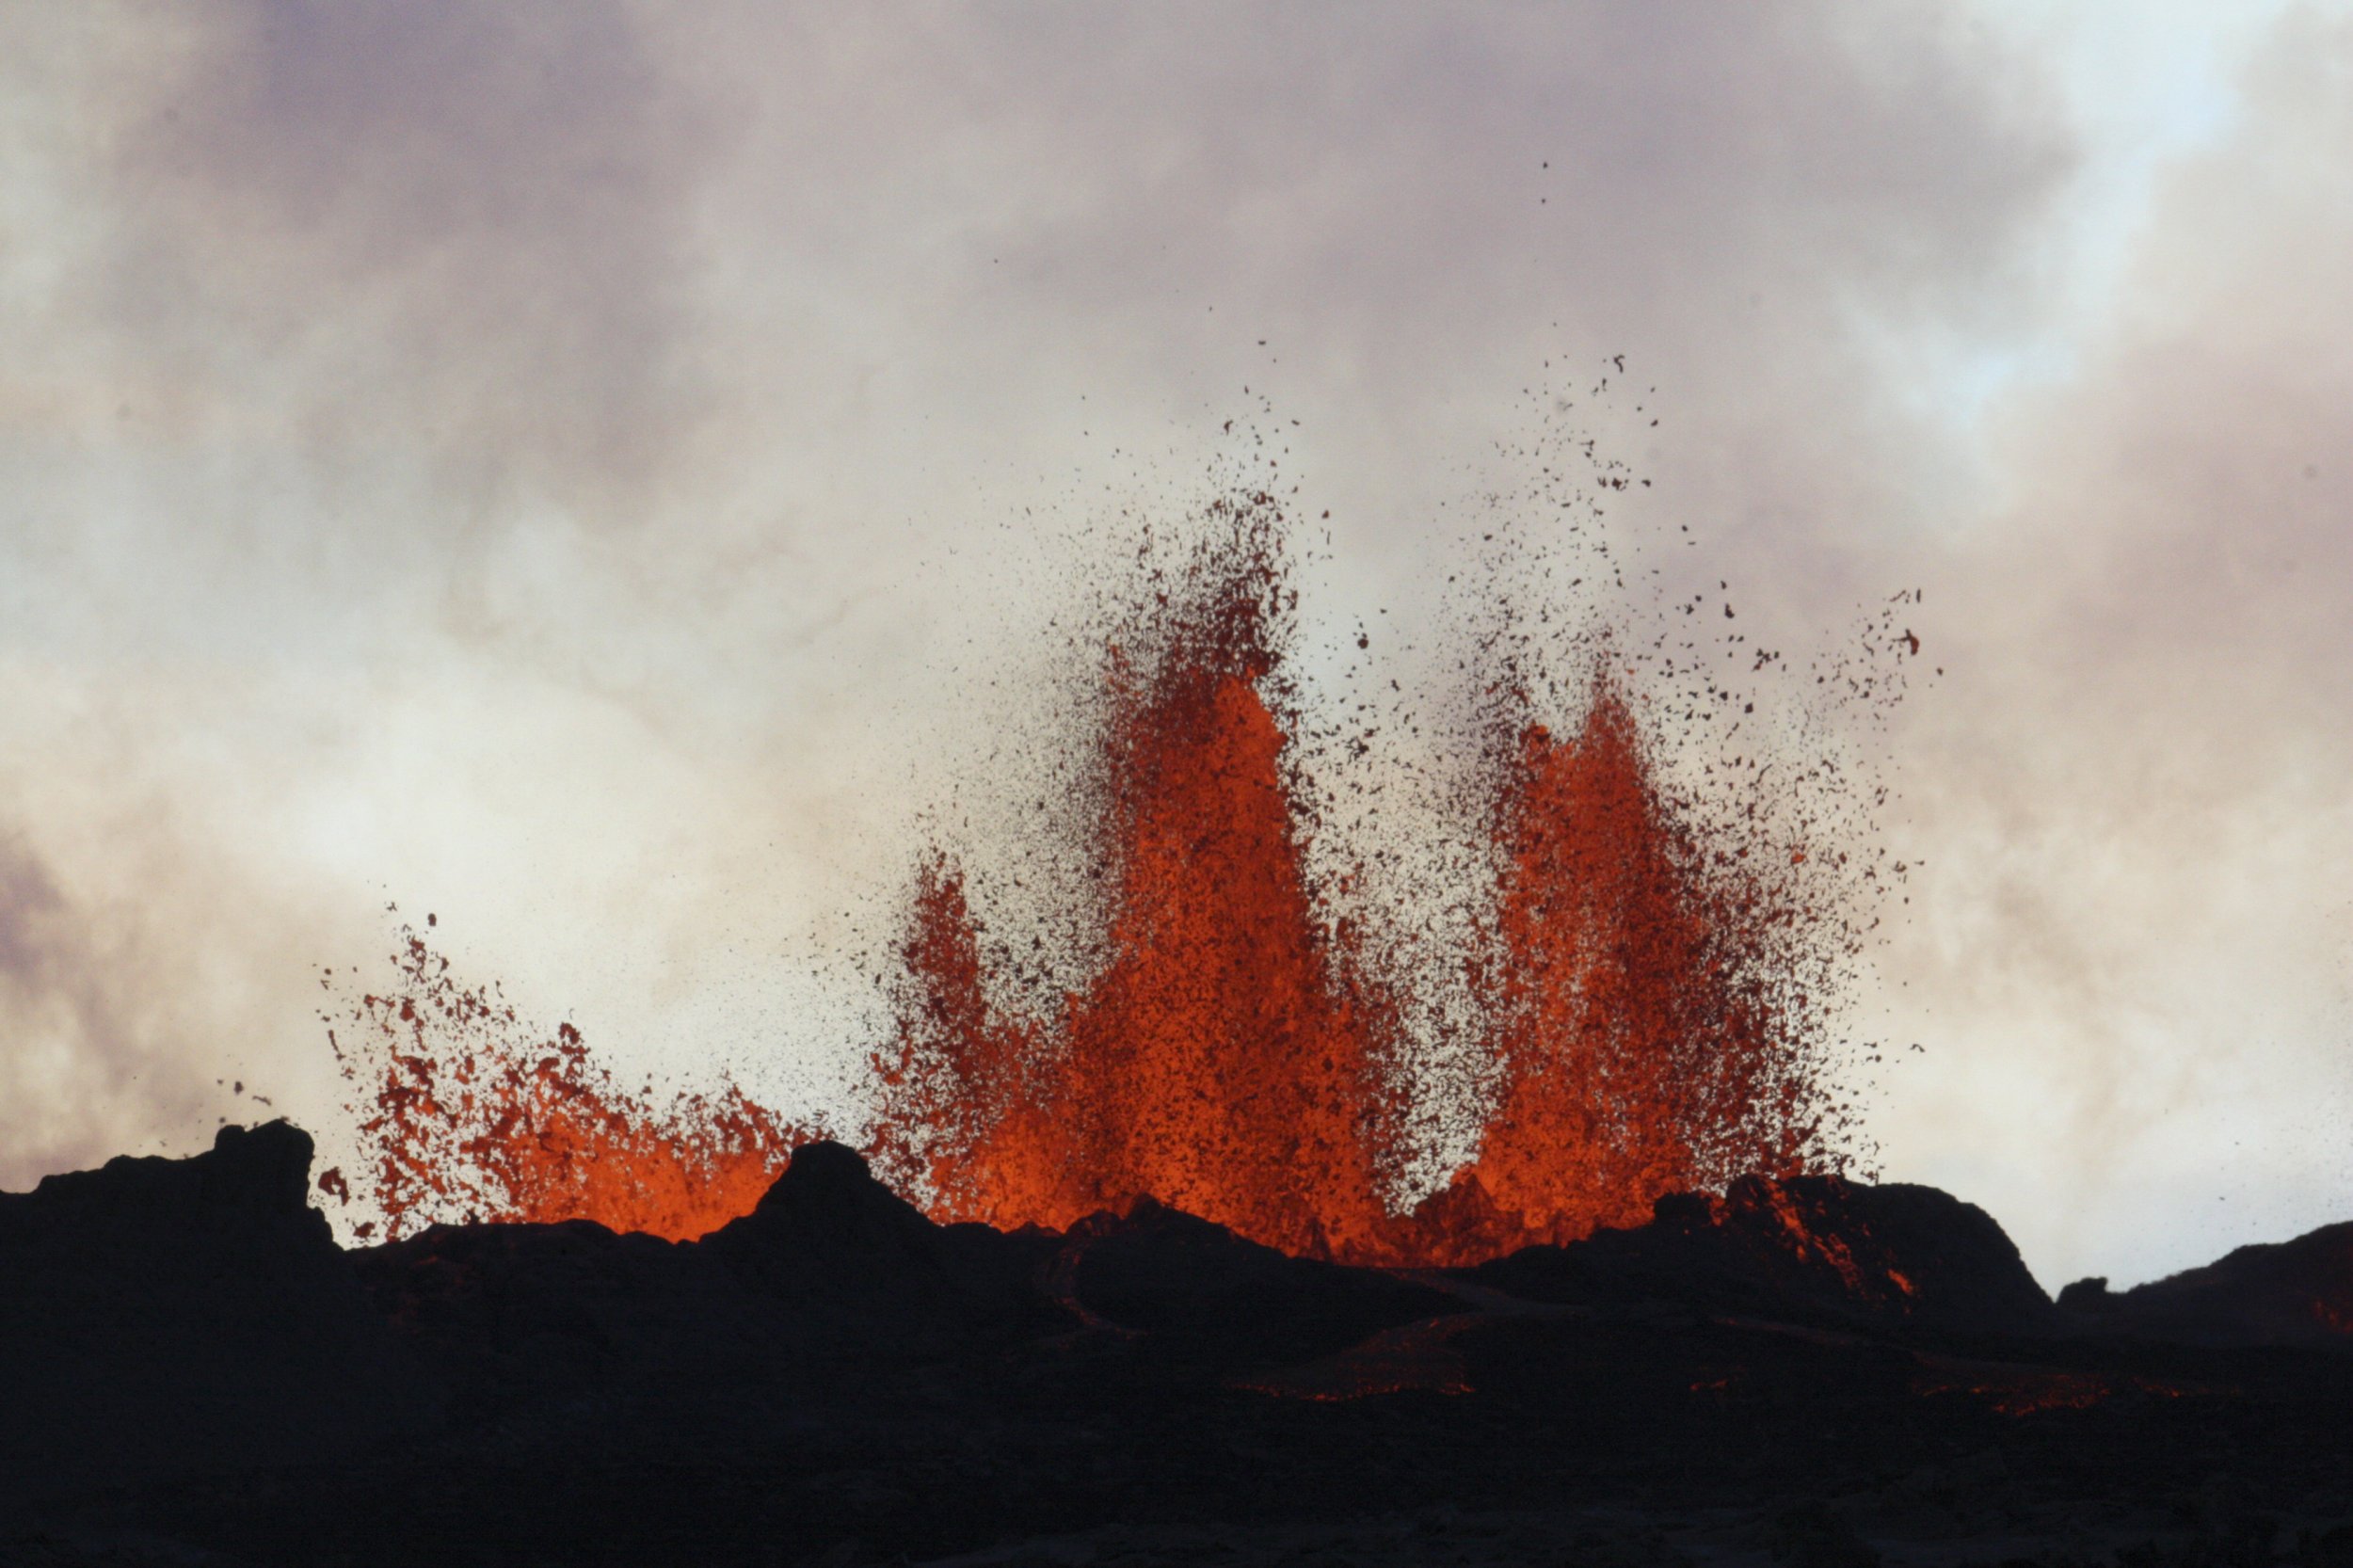 Iceland's Bardarbunga volcano